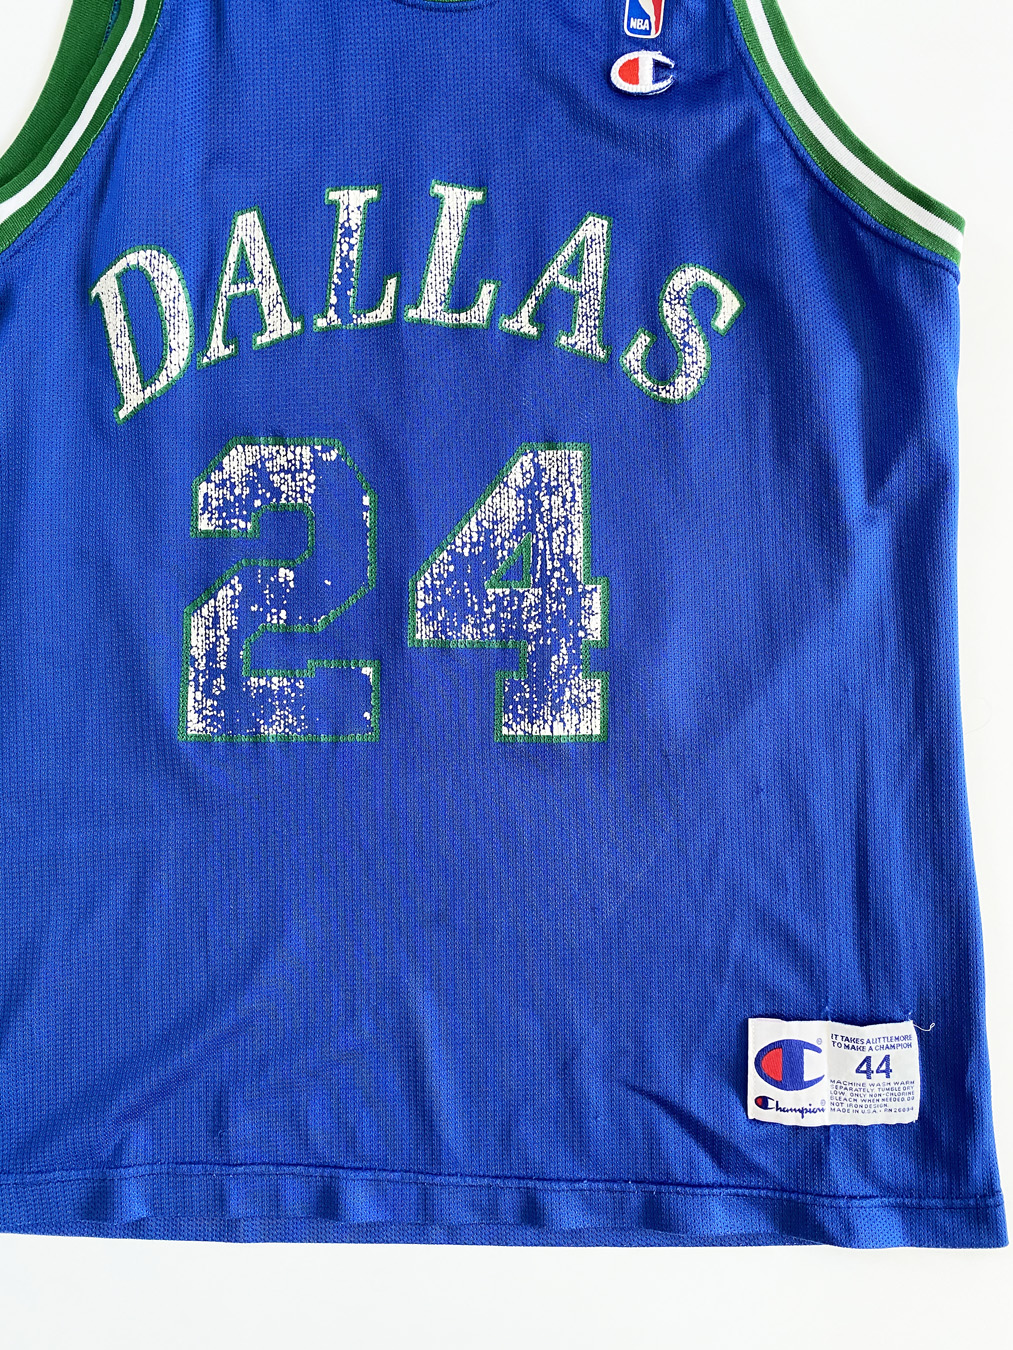 UsaVintageBarcelona Size 40. Rare Vintage 90s Jersey NBA Dallas Mavericks #24 Jackson Made in USA by Champion